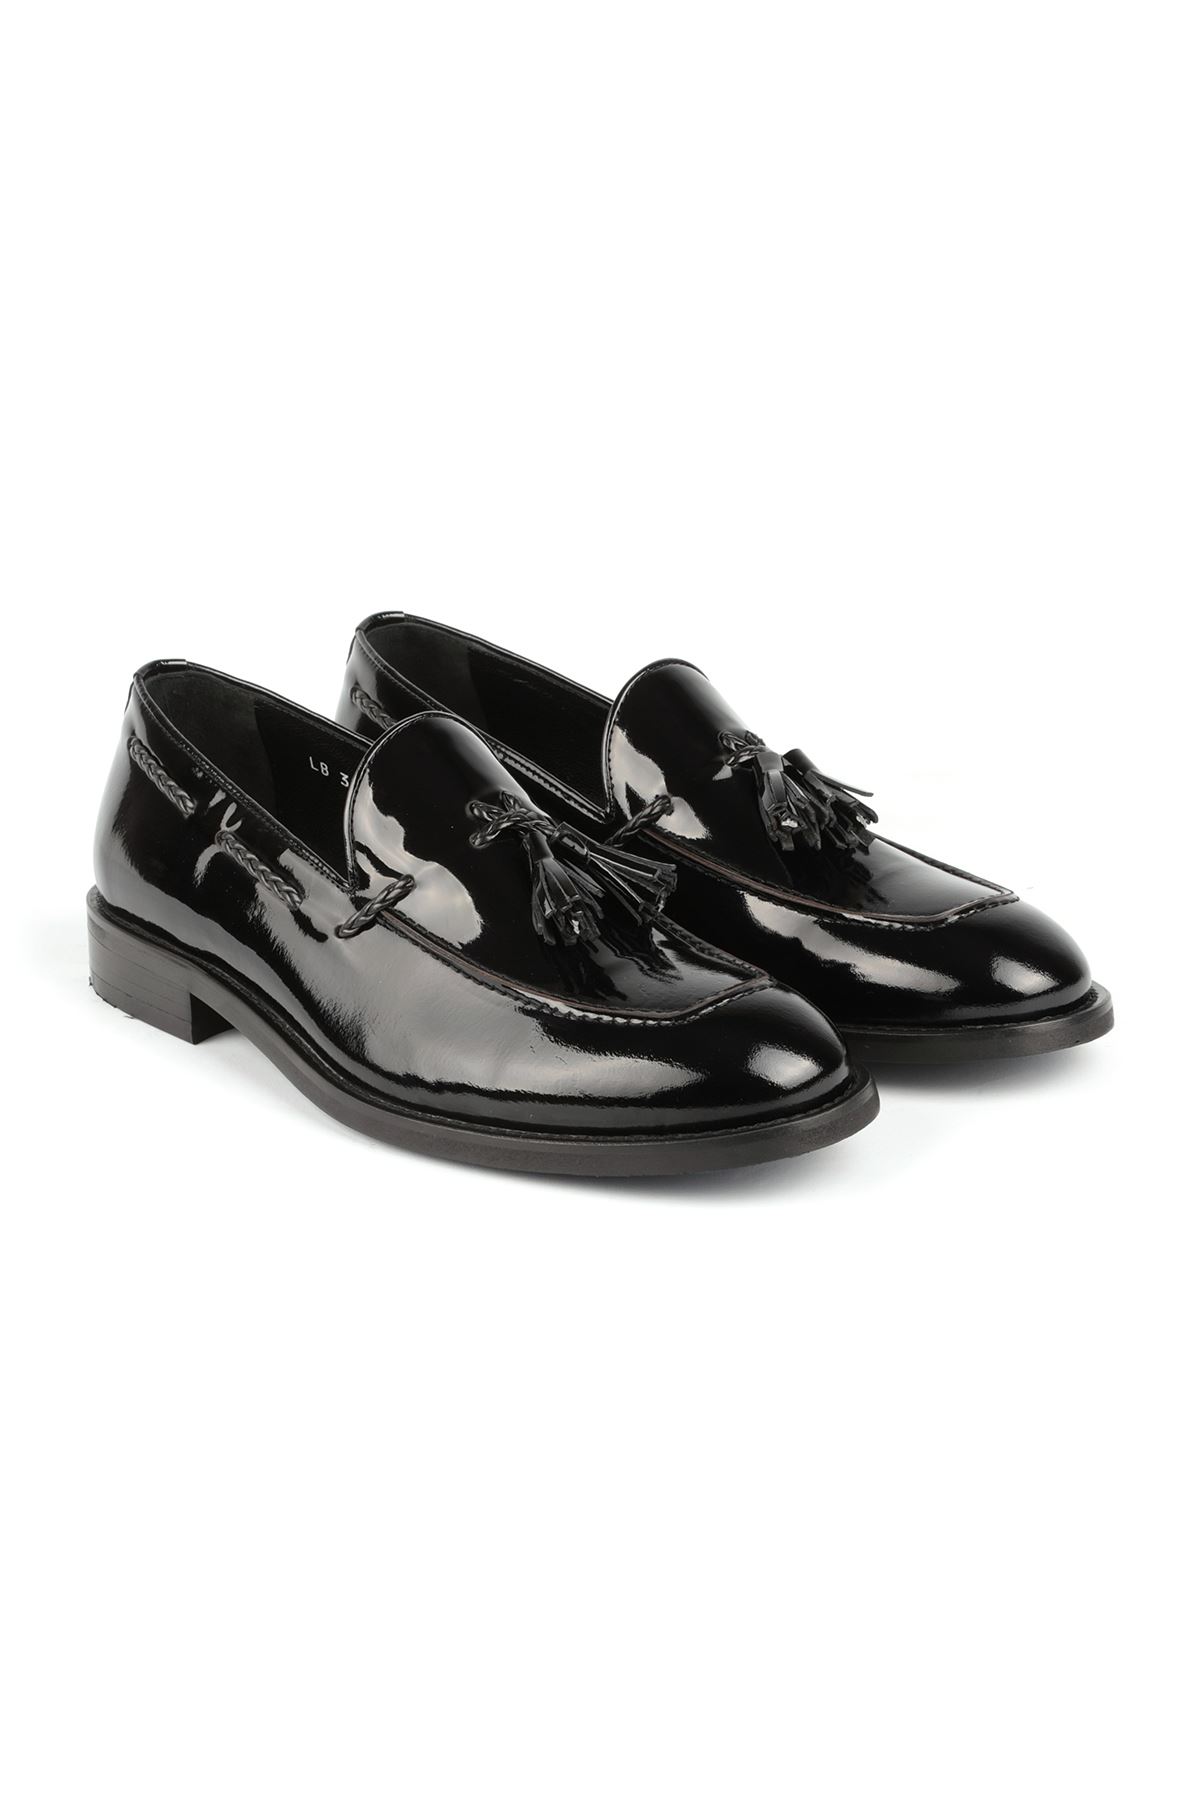 Libero L3562 Black Loafer Casual Shoes